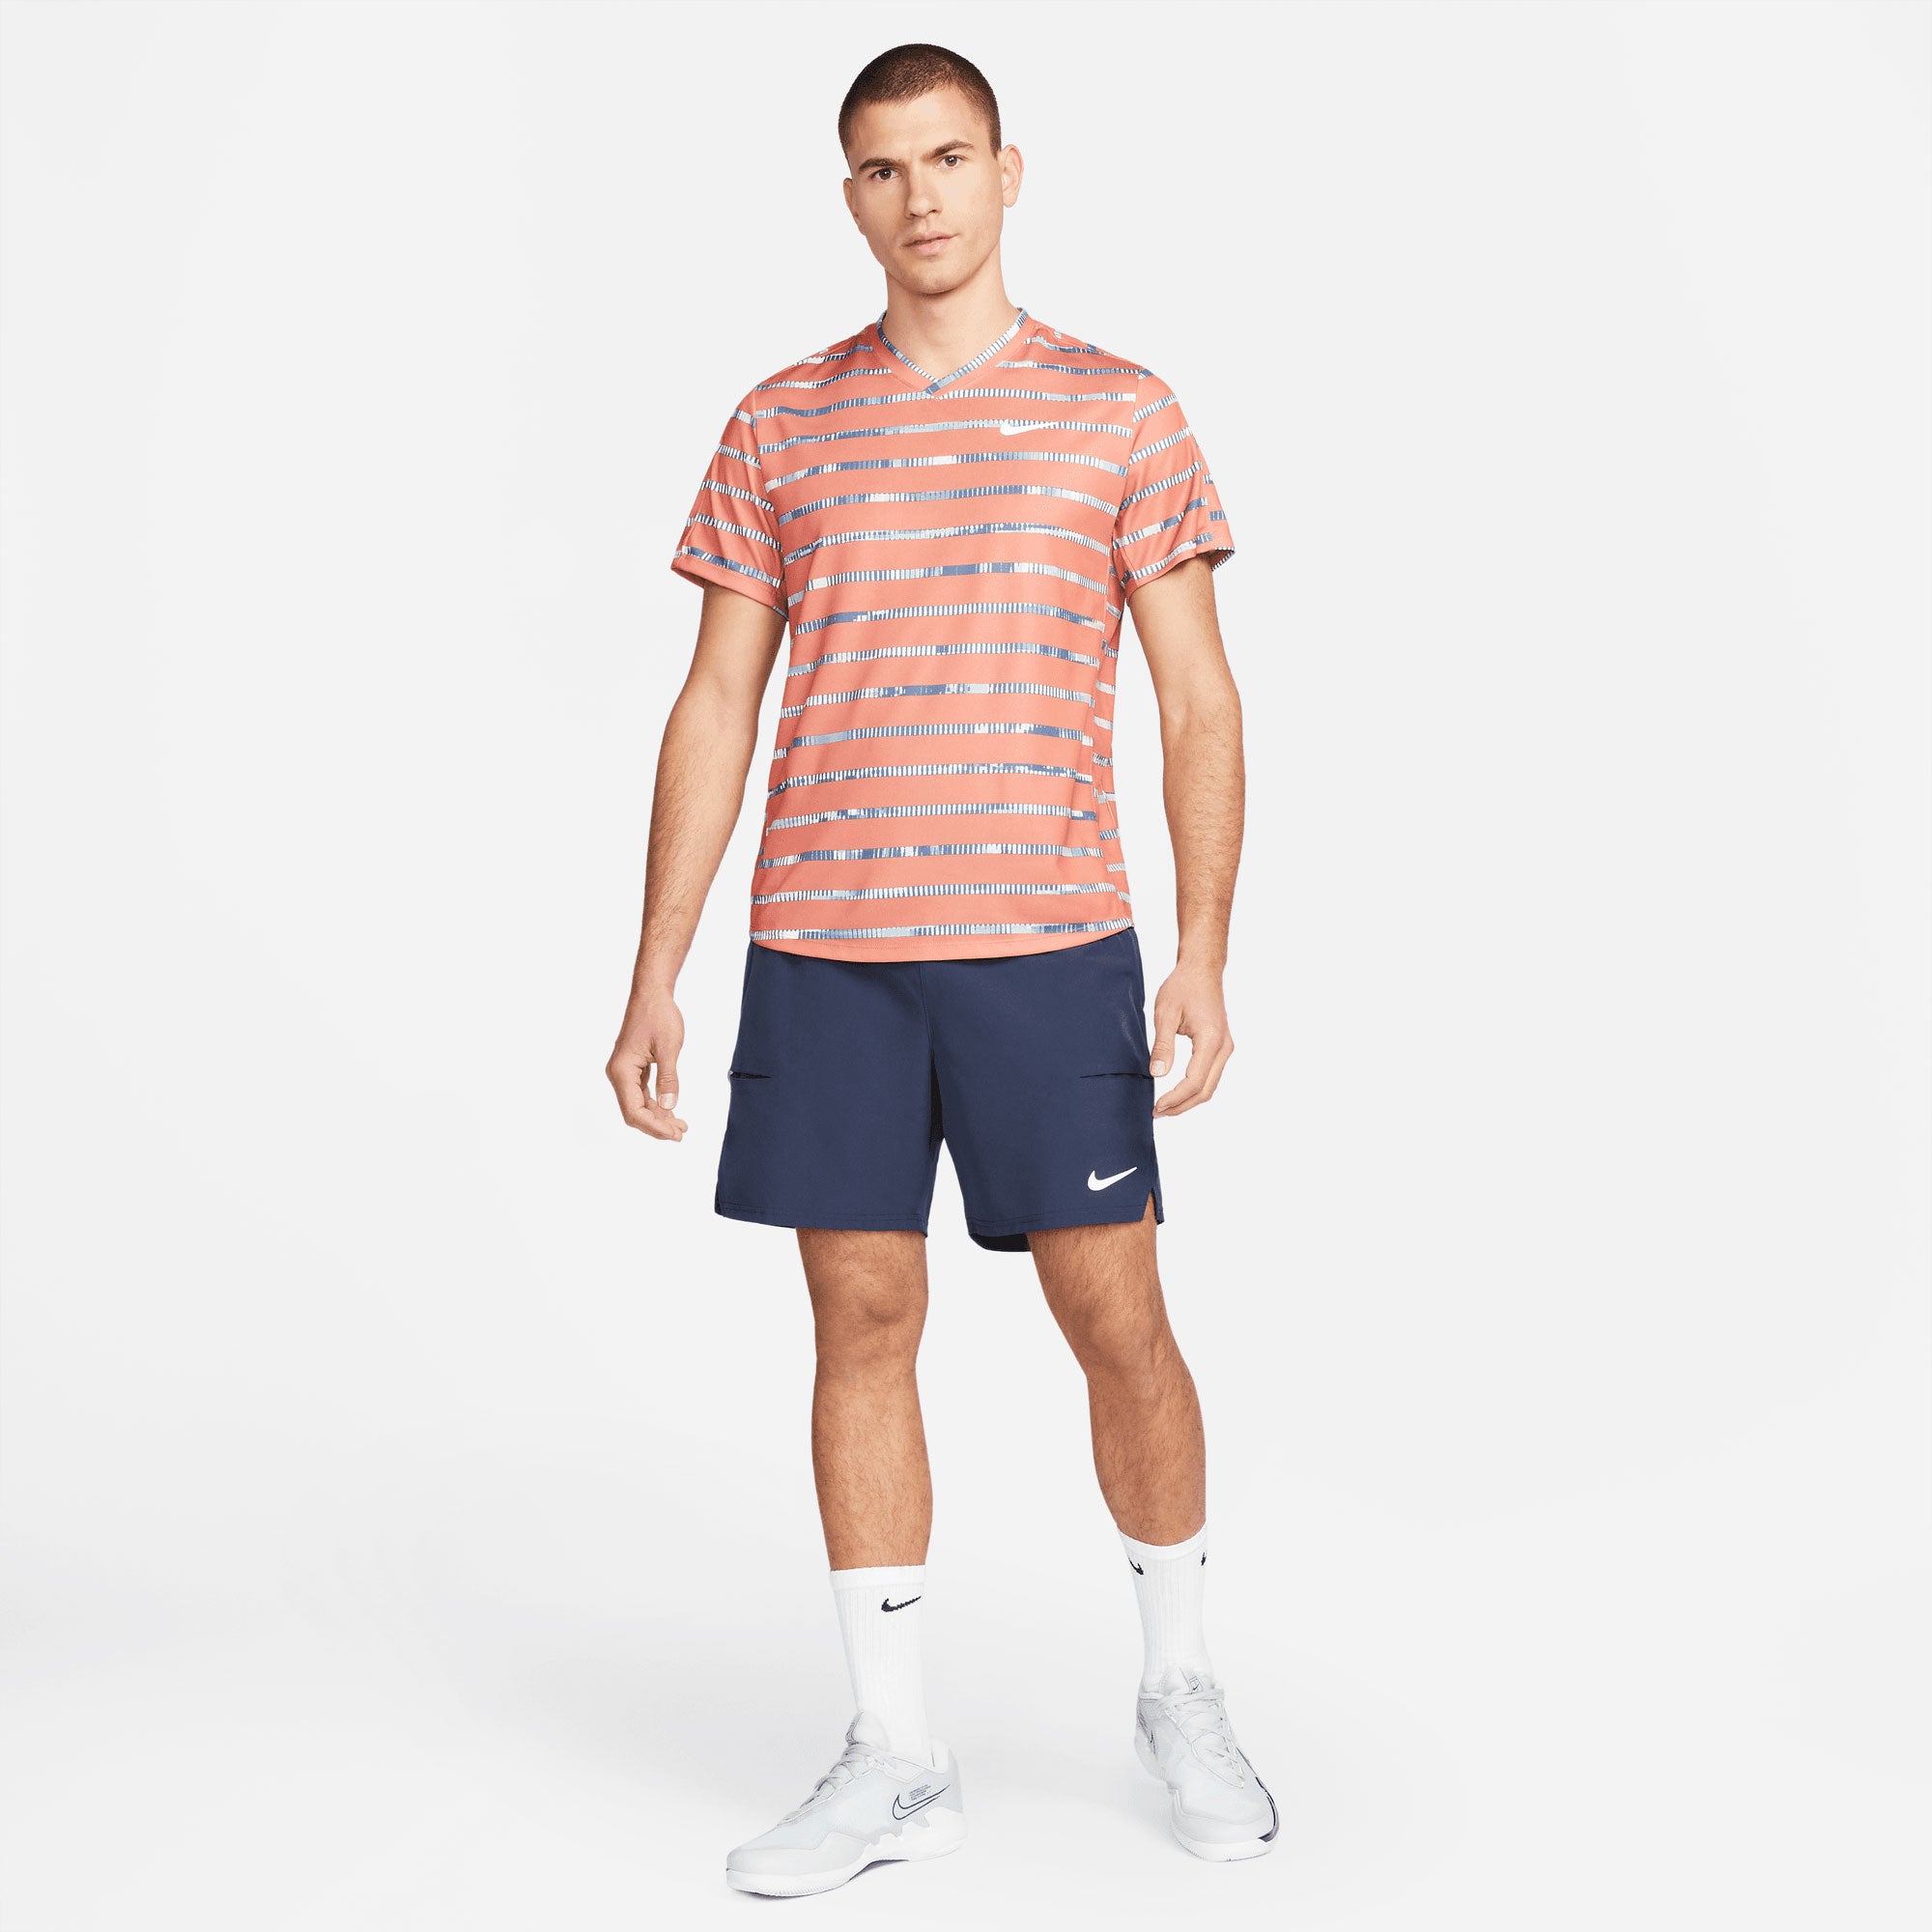 NikeCourt Dri-FIT Victory Men's Printed Tennis Shirt Orange (4)